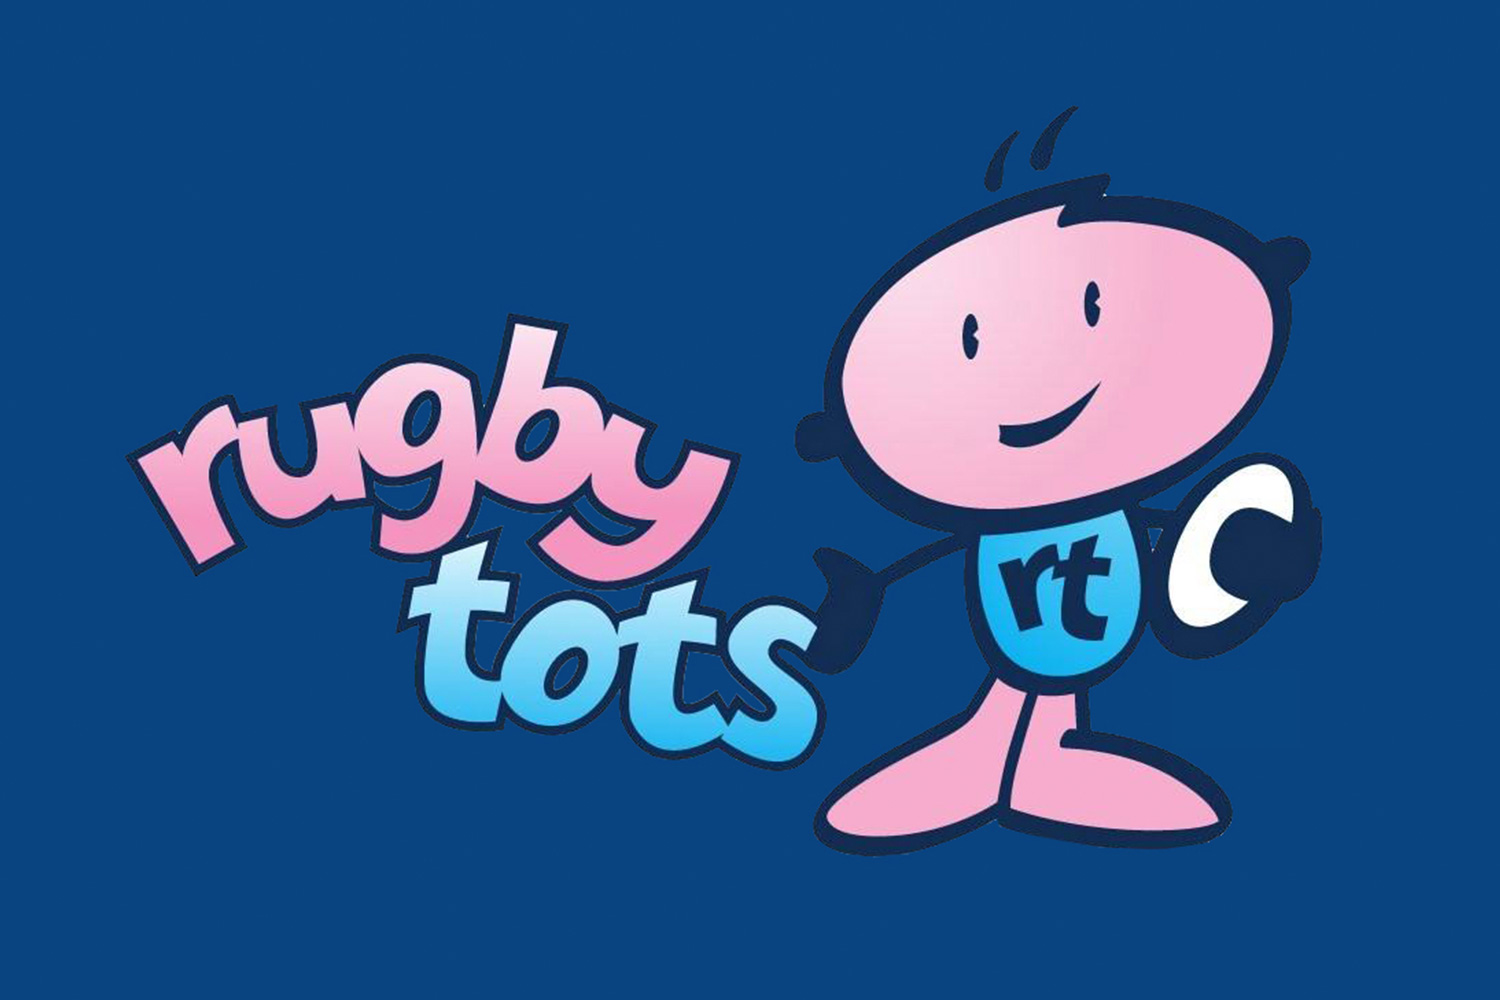 Old Rugbytots logo